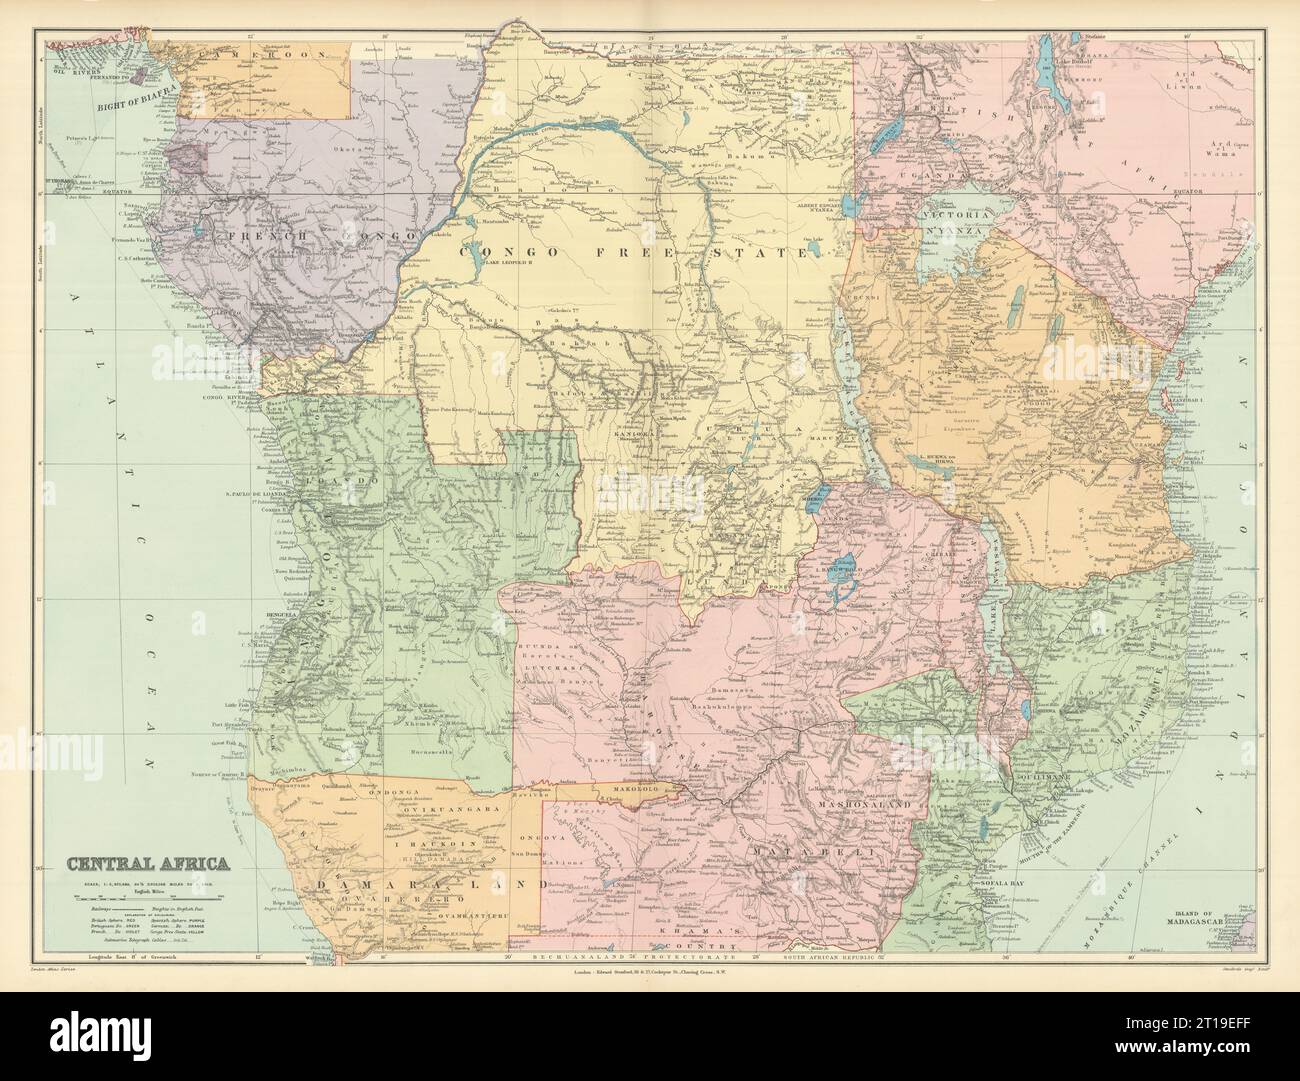 Zentralafrika. Kongo Freistaat Rhodesien Deutsch-Ostafrika. STANFORD 1894 Karte Stockfoto